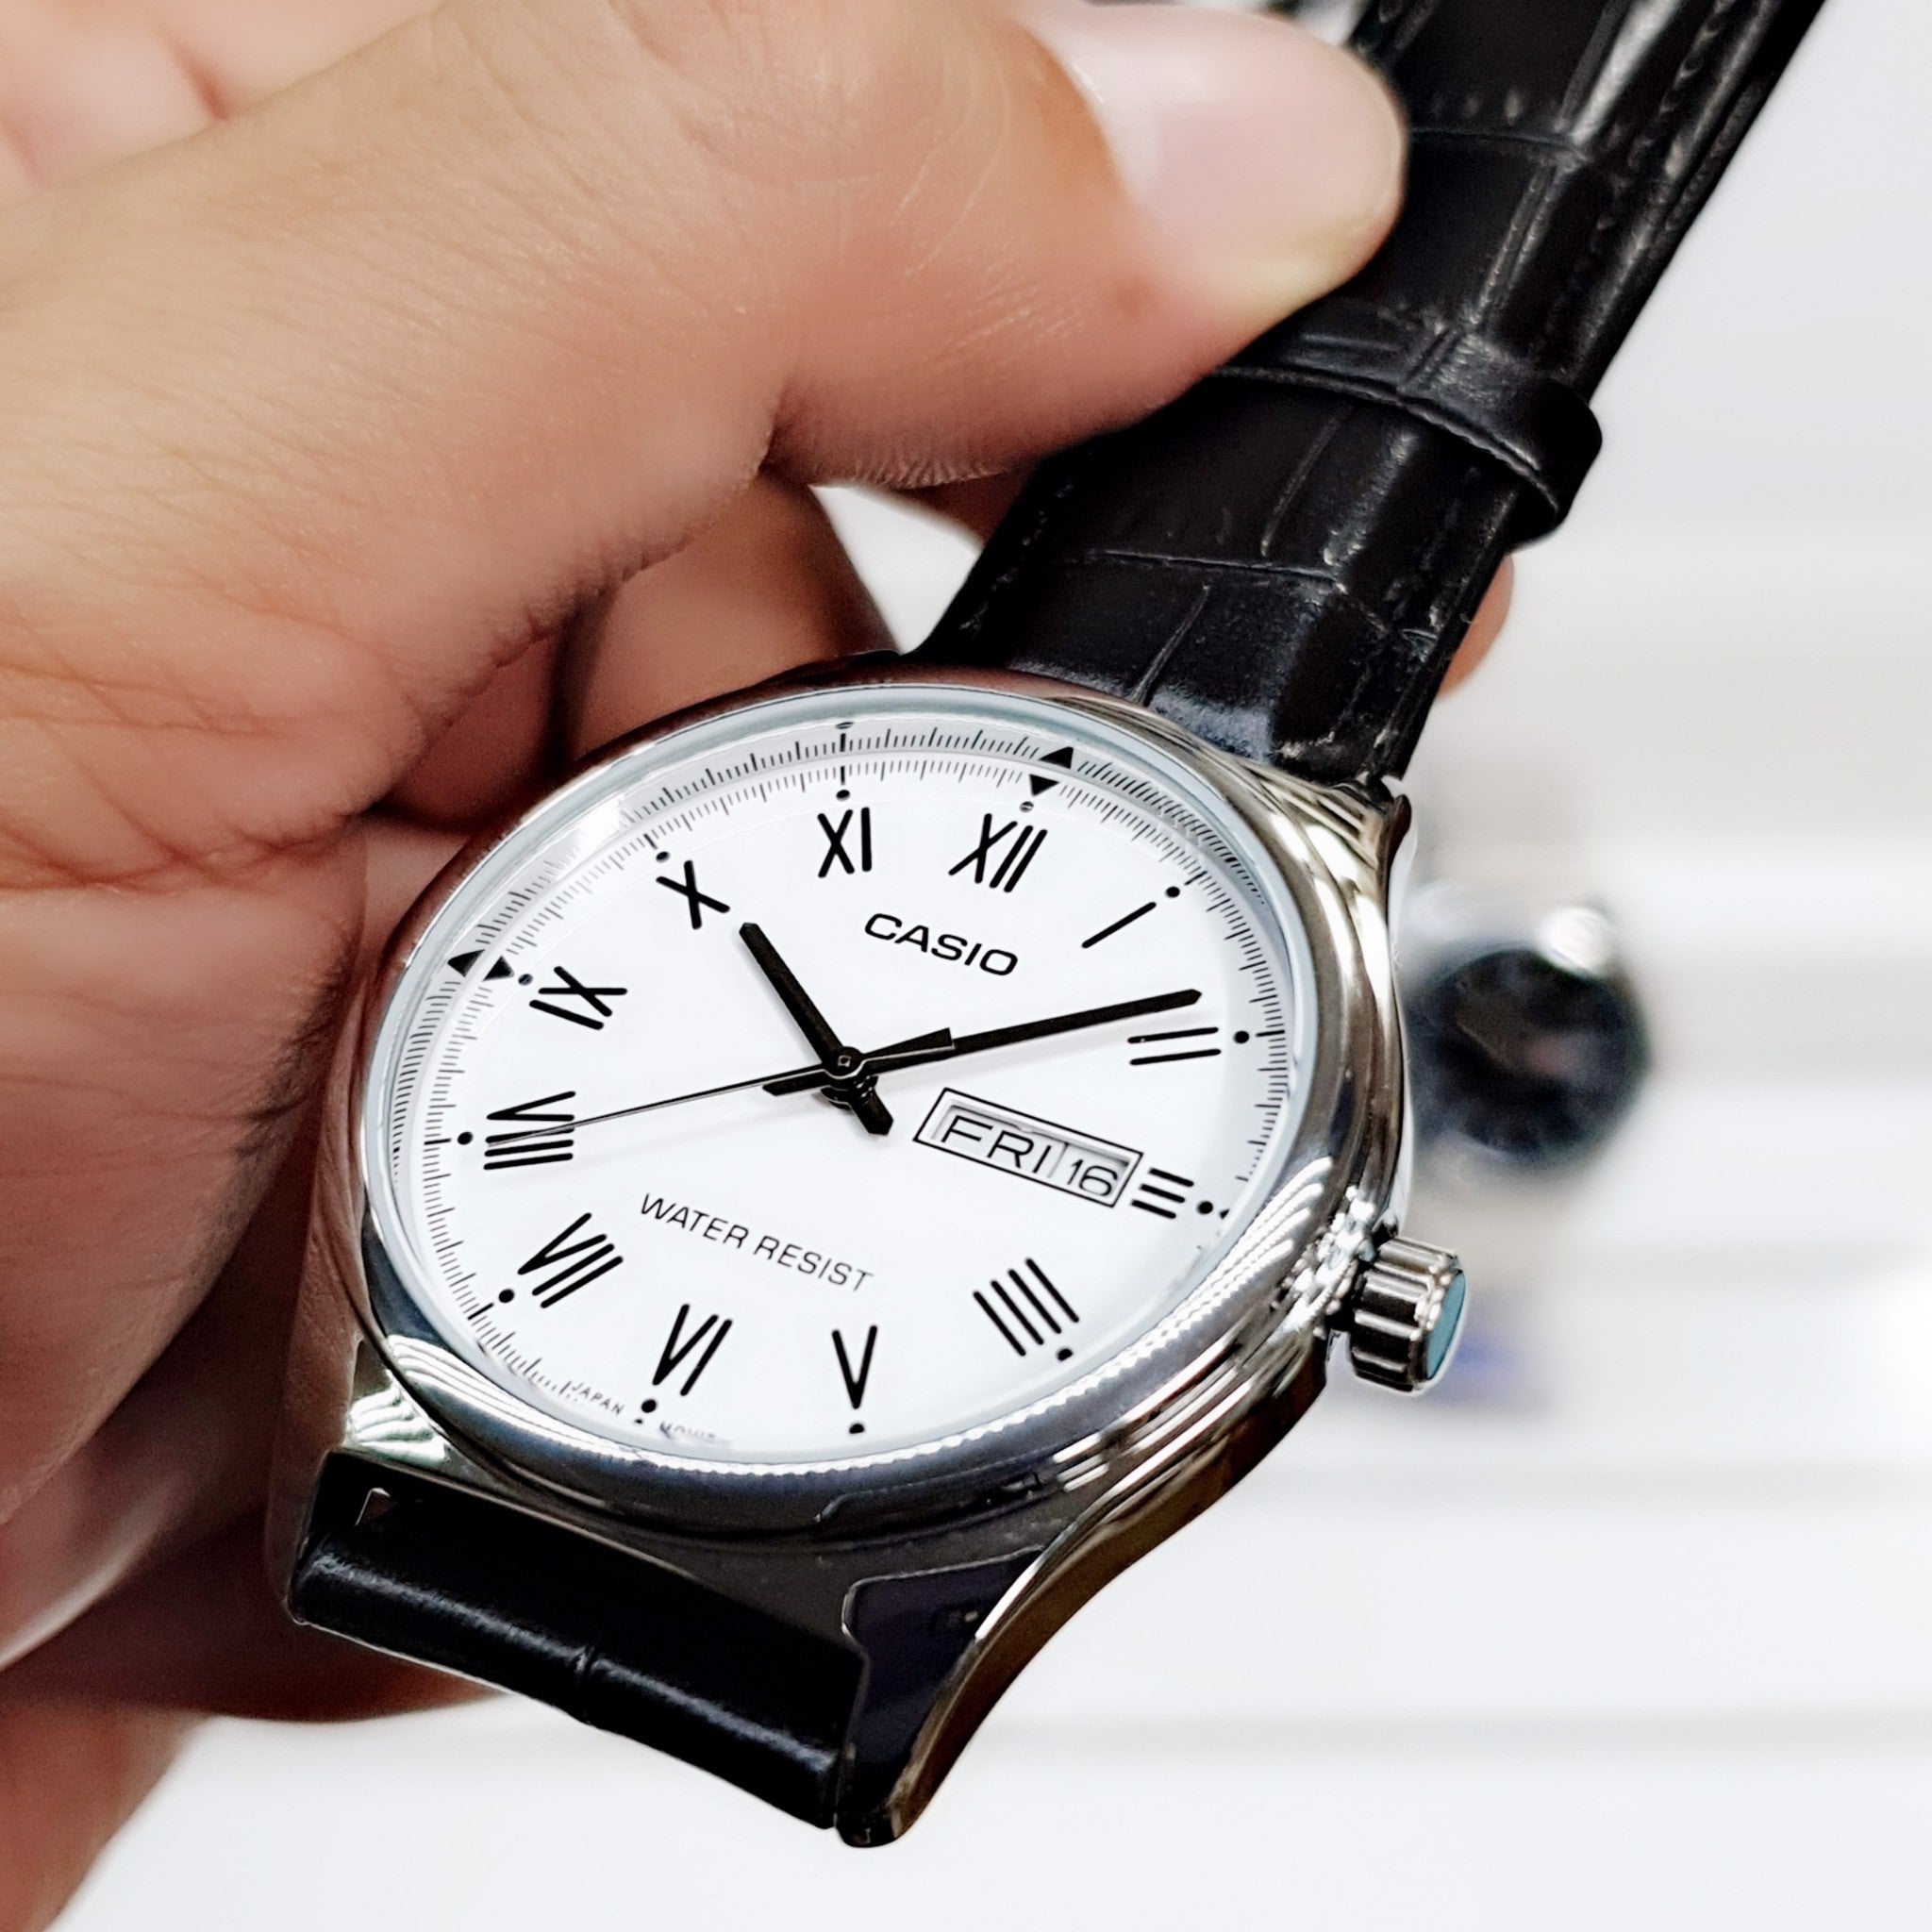 Casio MTP-V006L-7BUDF Wristwatch for men